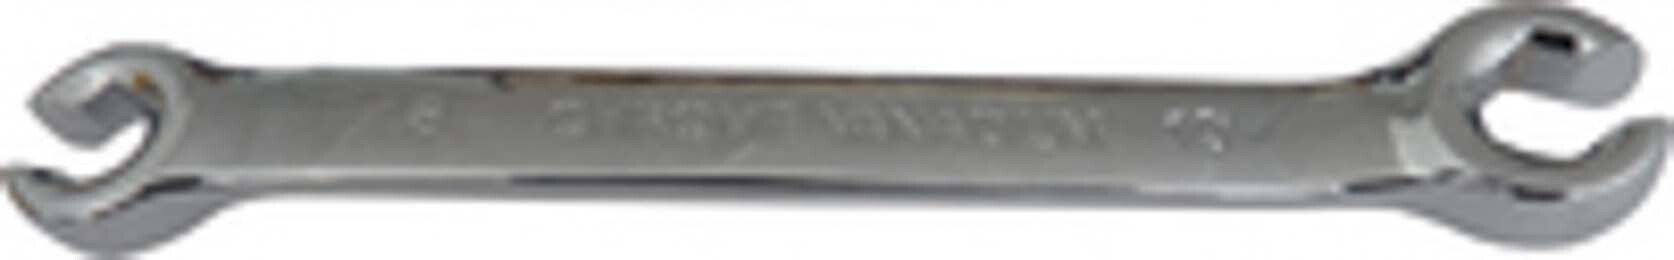 Couteau inox n°9 ' ' OPINEL - 17672